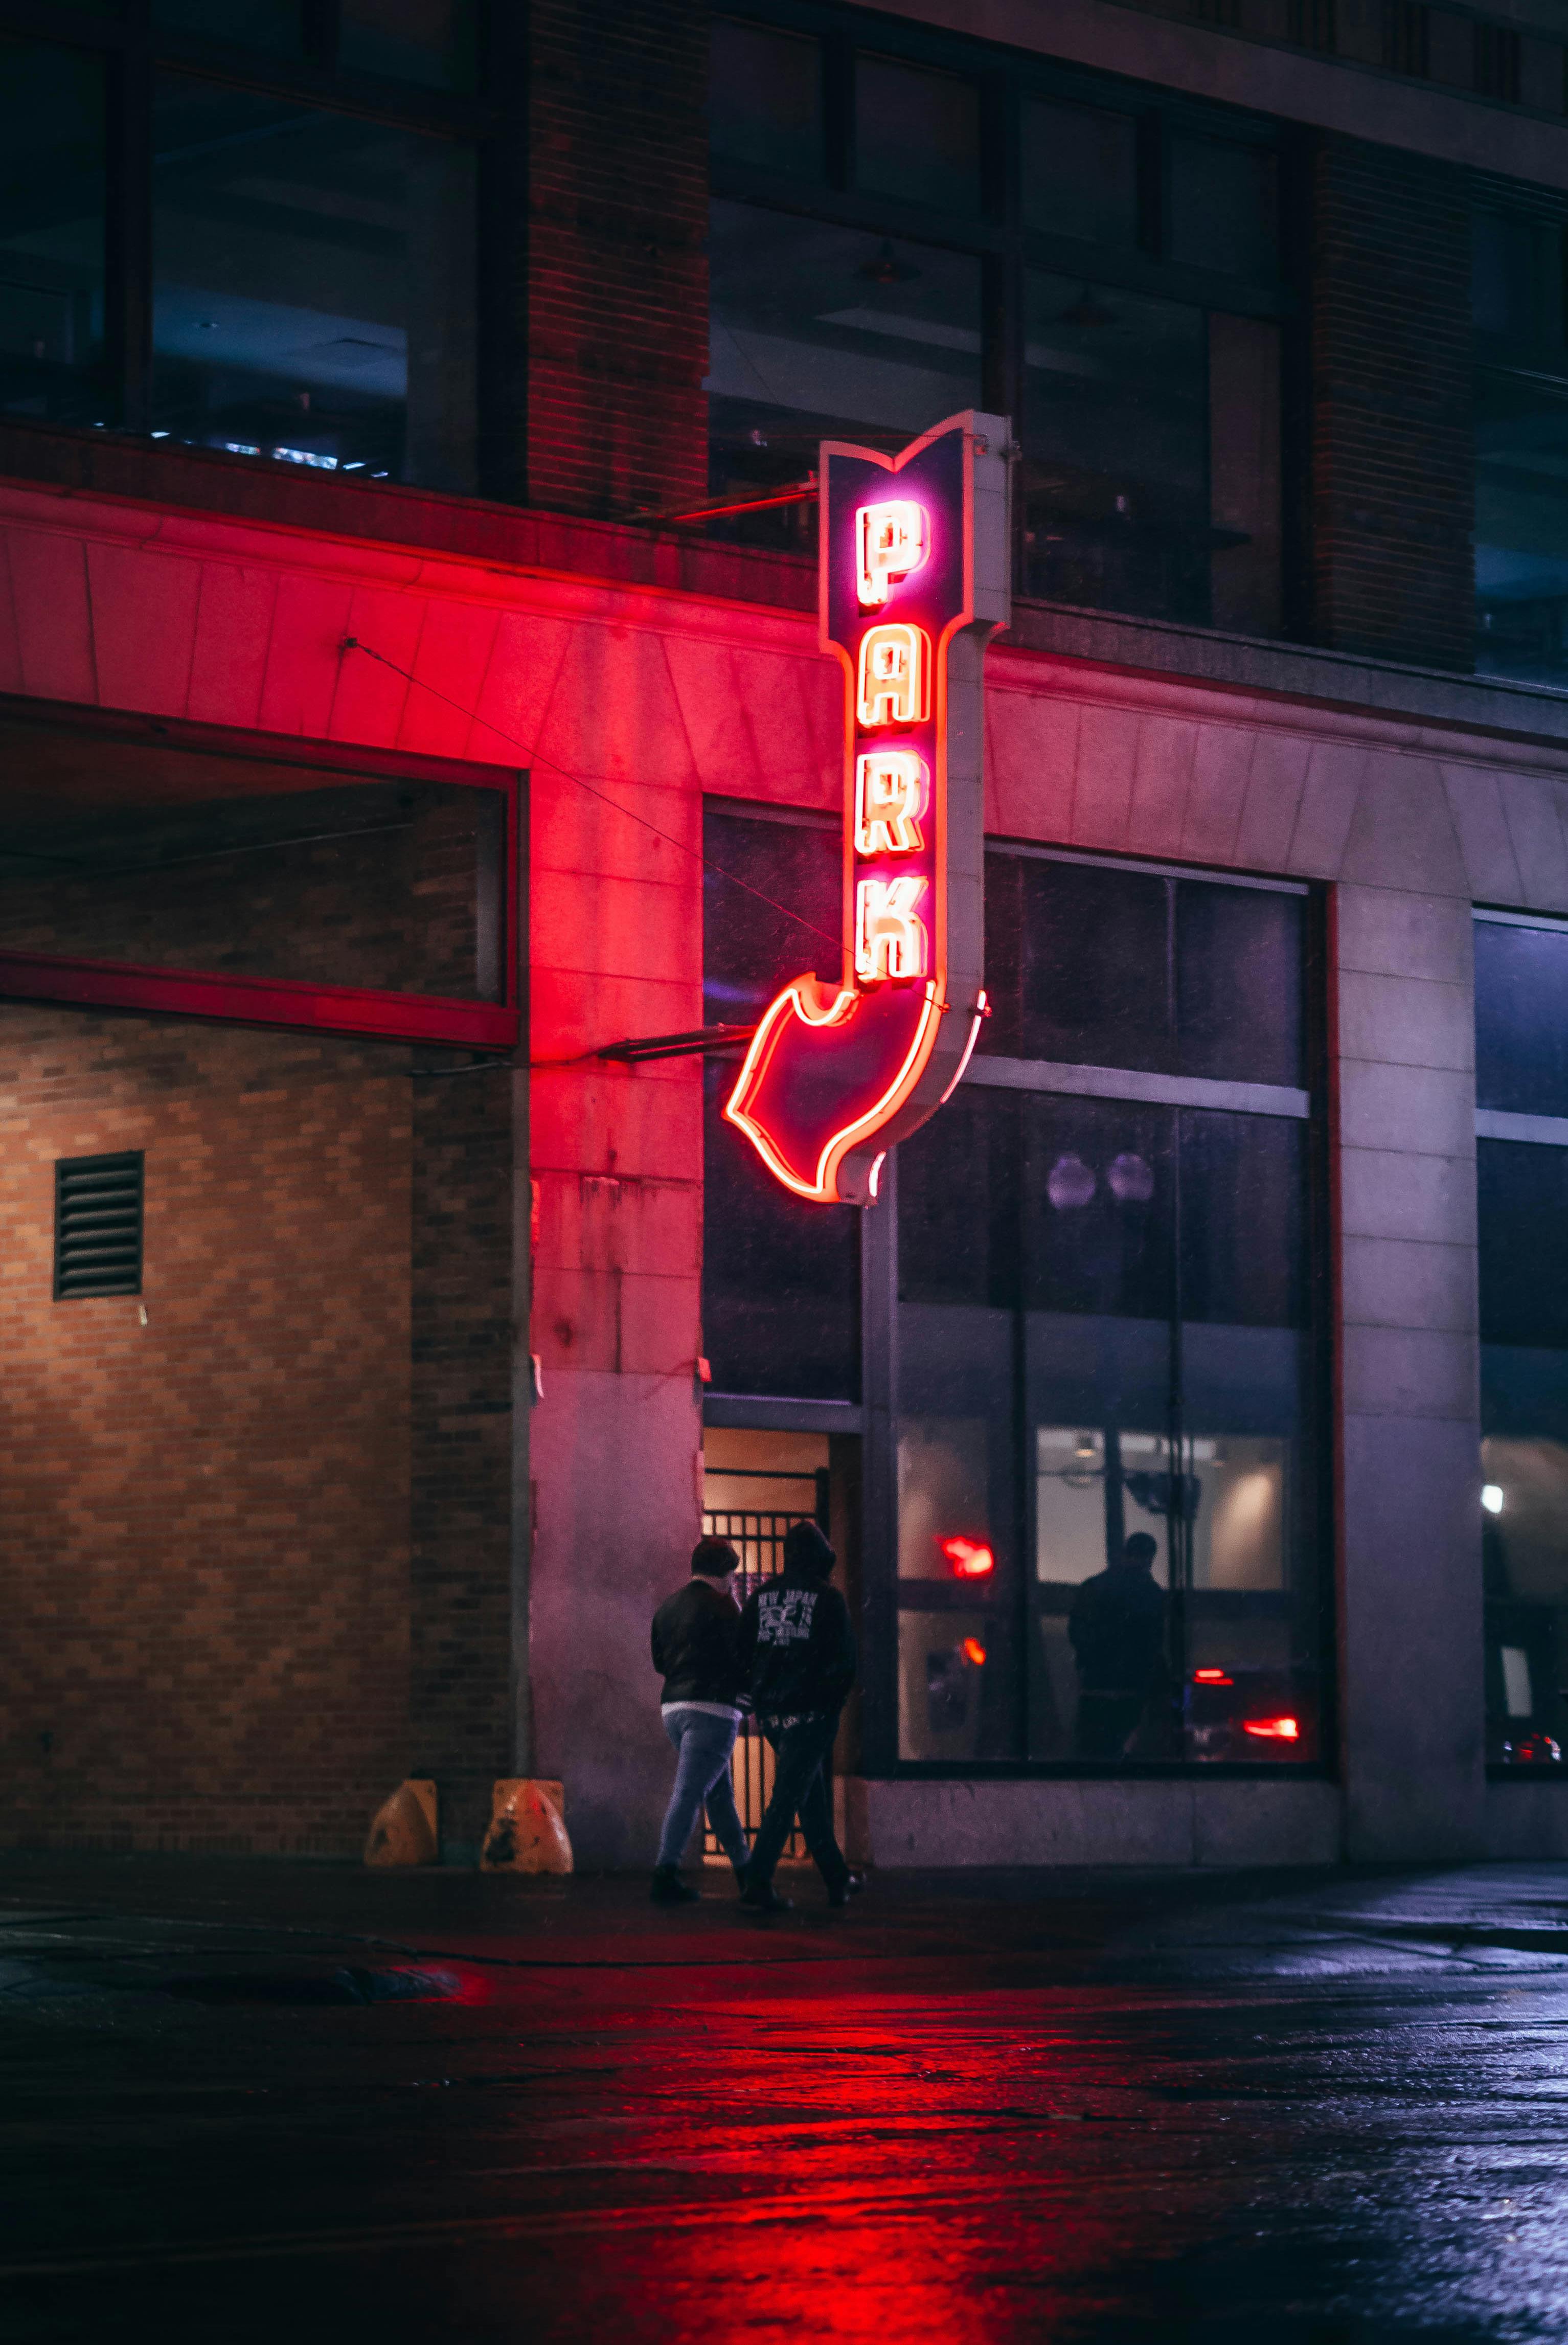 Street Lights near Buildings Illuminated at Night Time · Free Stock Photo